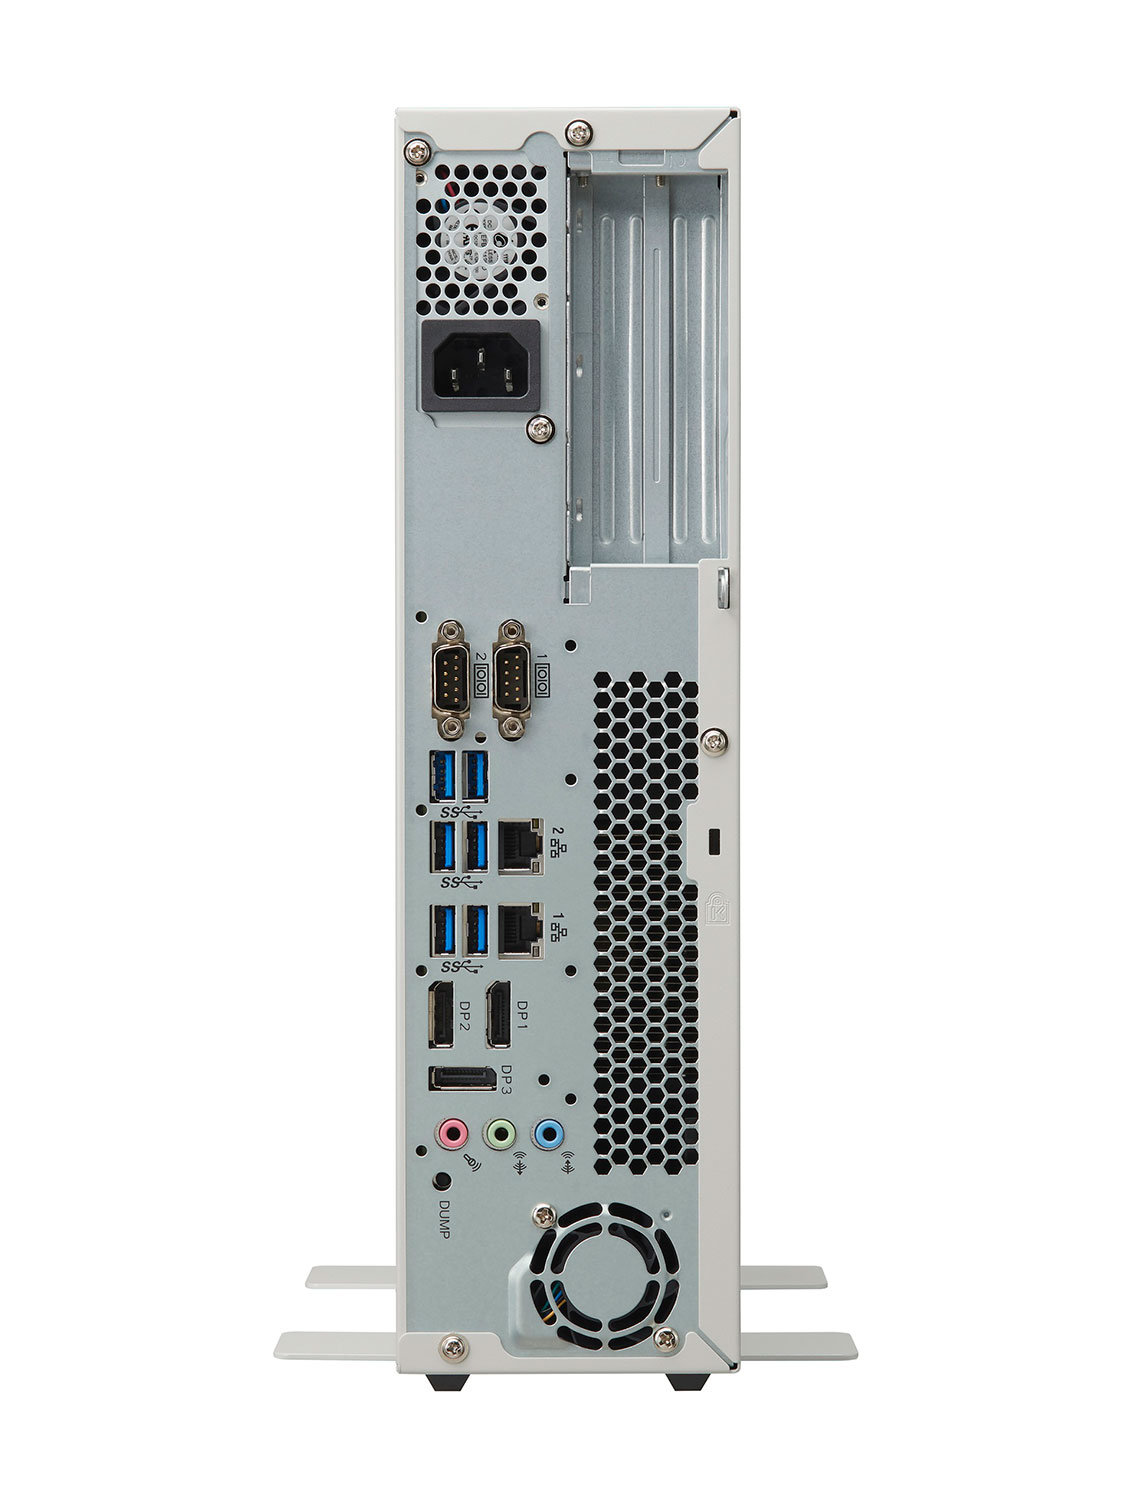 NEC、ファクトリコンピュータ「FC98-NX」のエントリーモデルを刷新 12世代Coreなどを採用し性能を大幅強化 - ITmedia PC USER